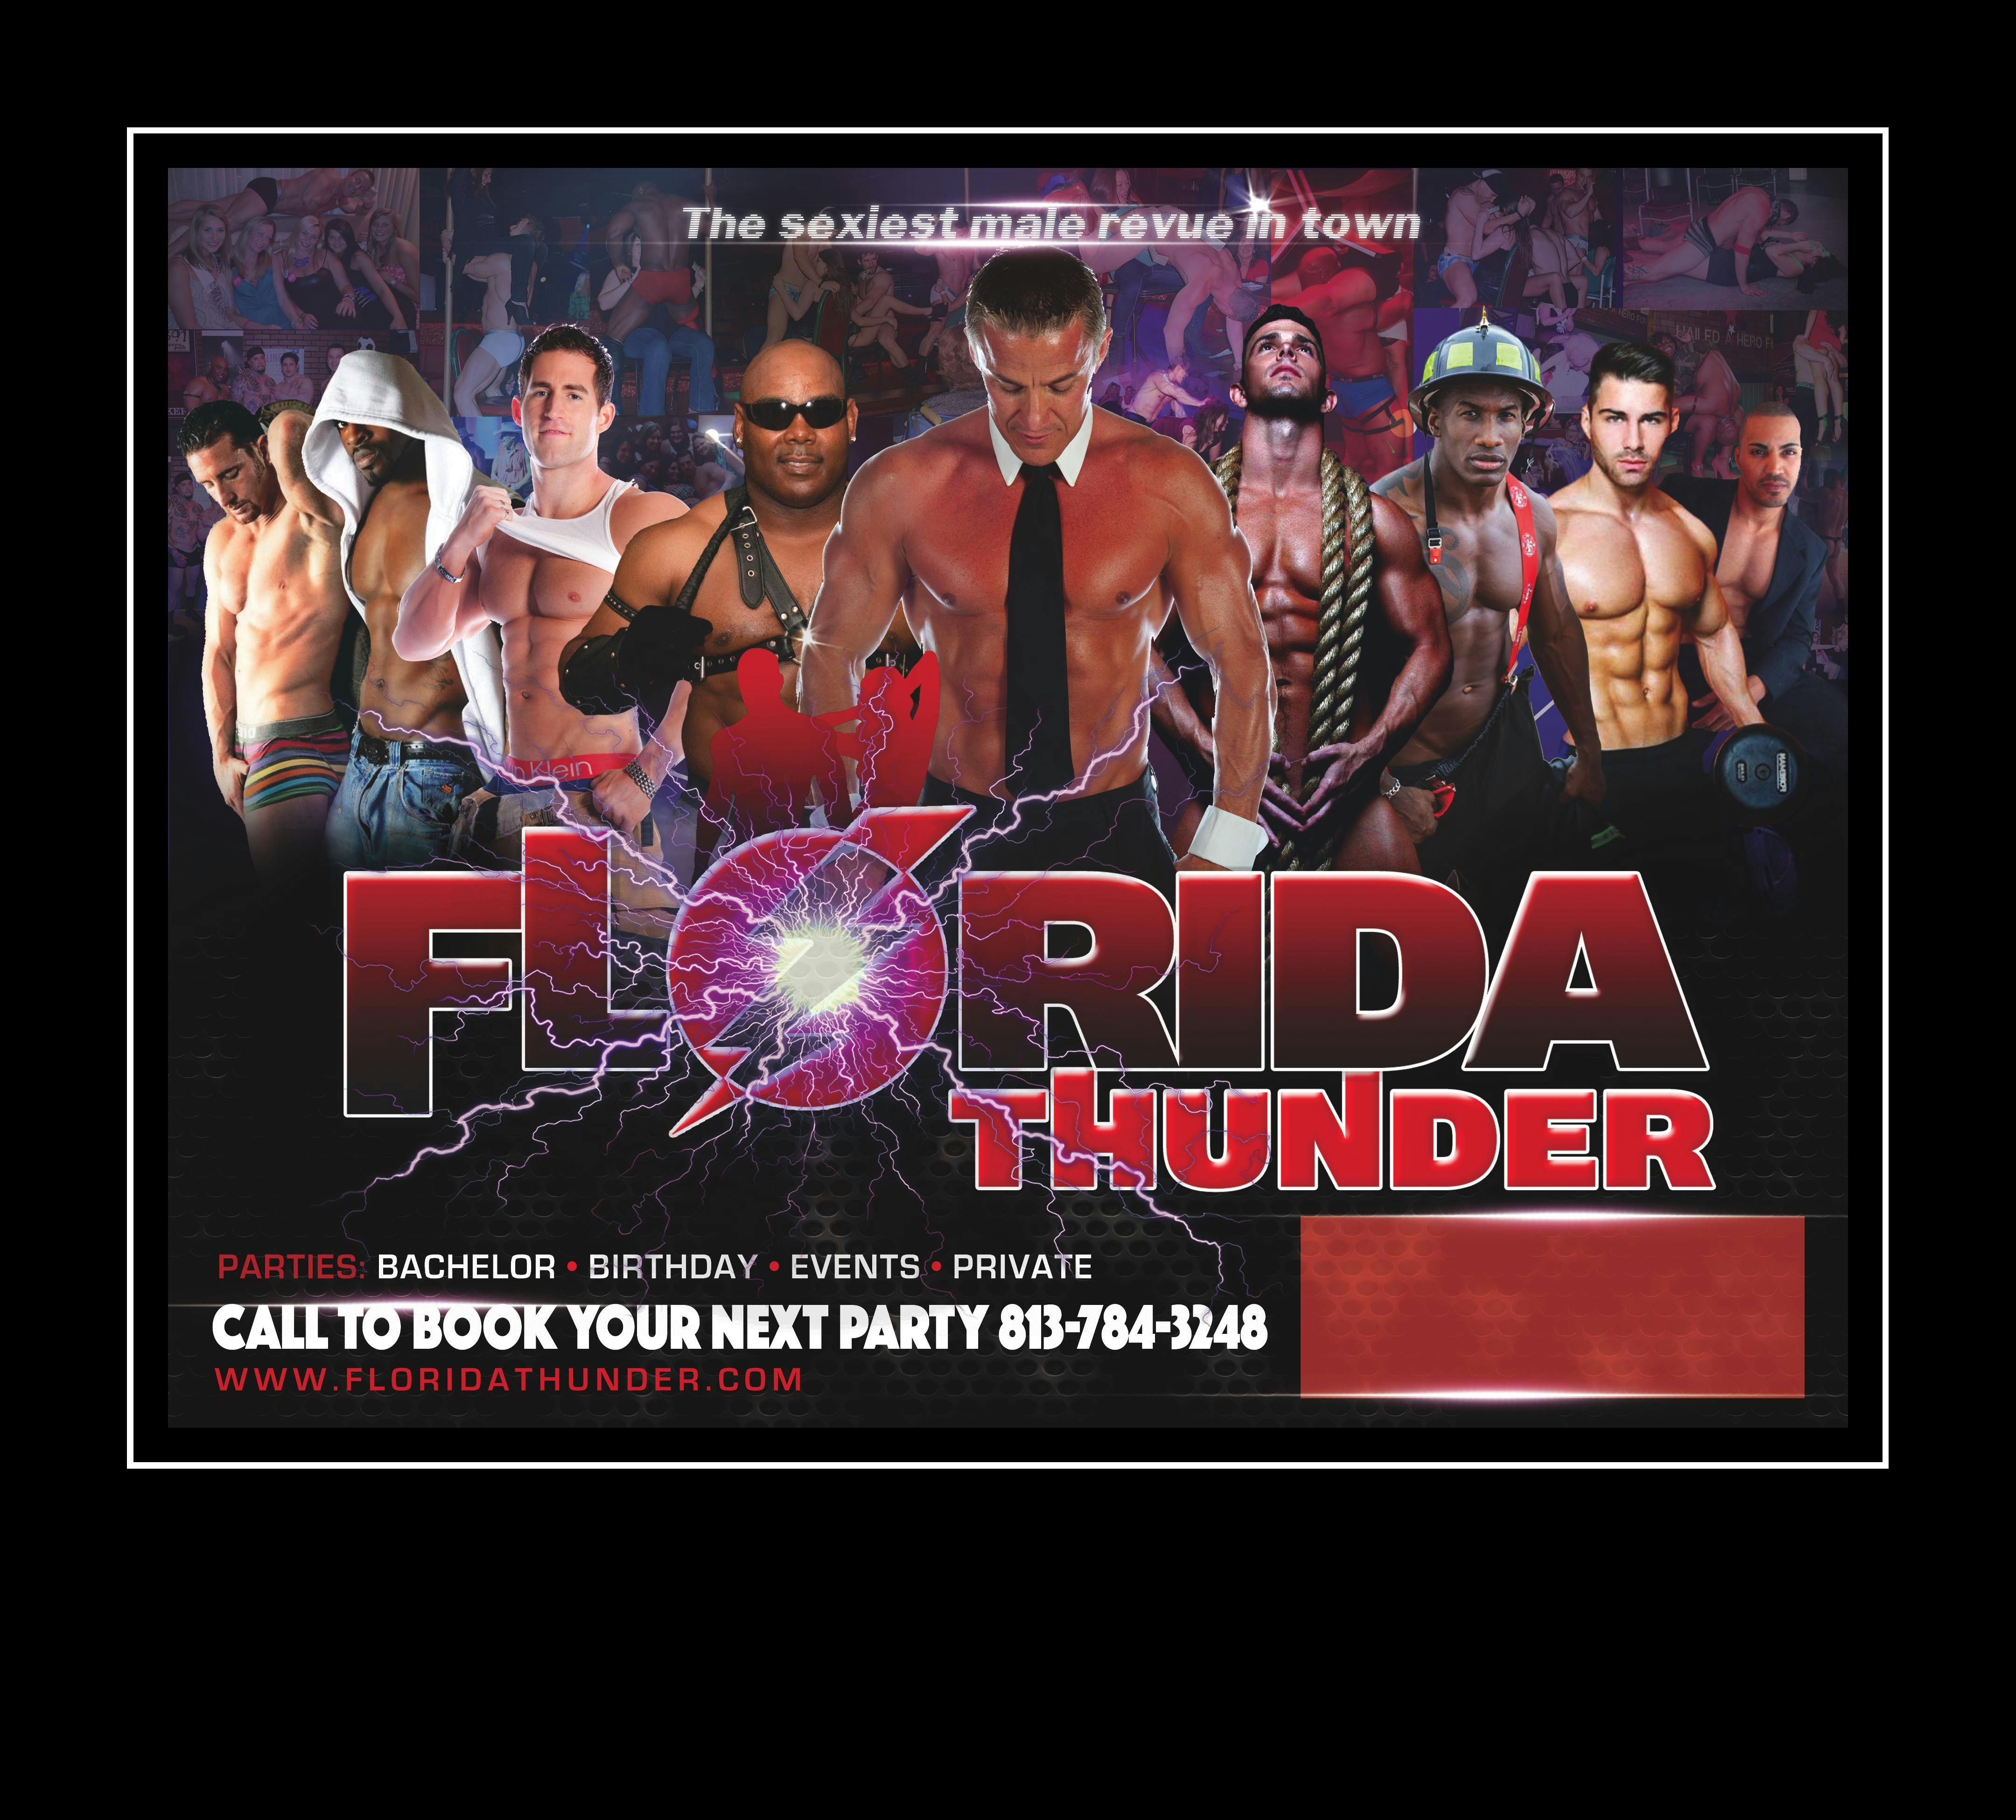 Magic Mike Saturday Nights with Florida Thunder